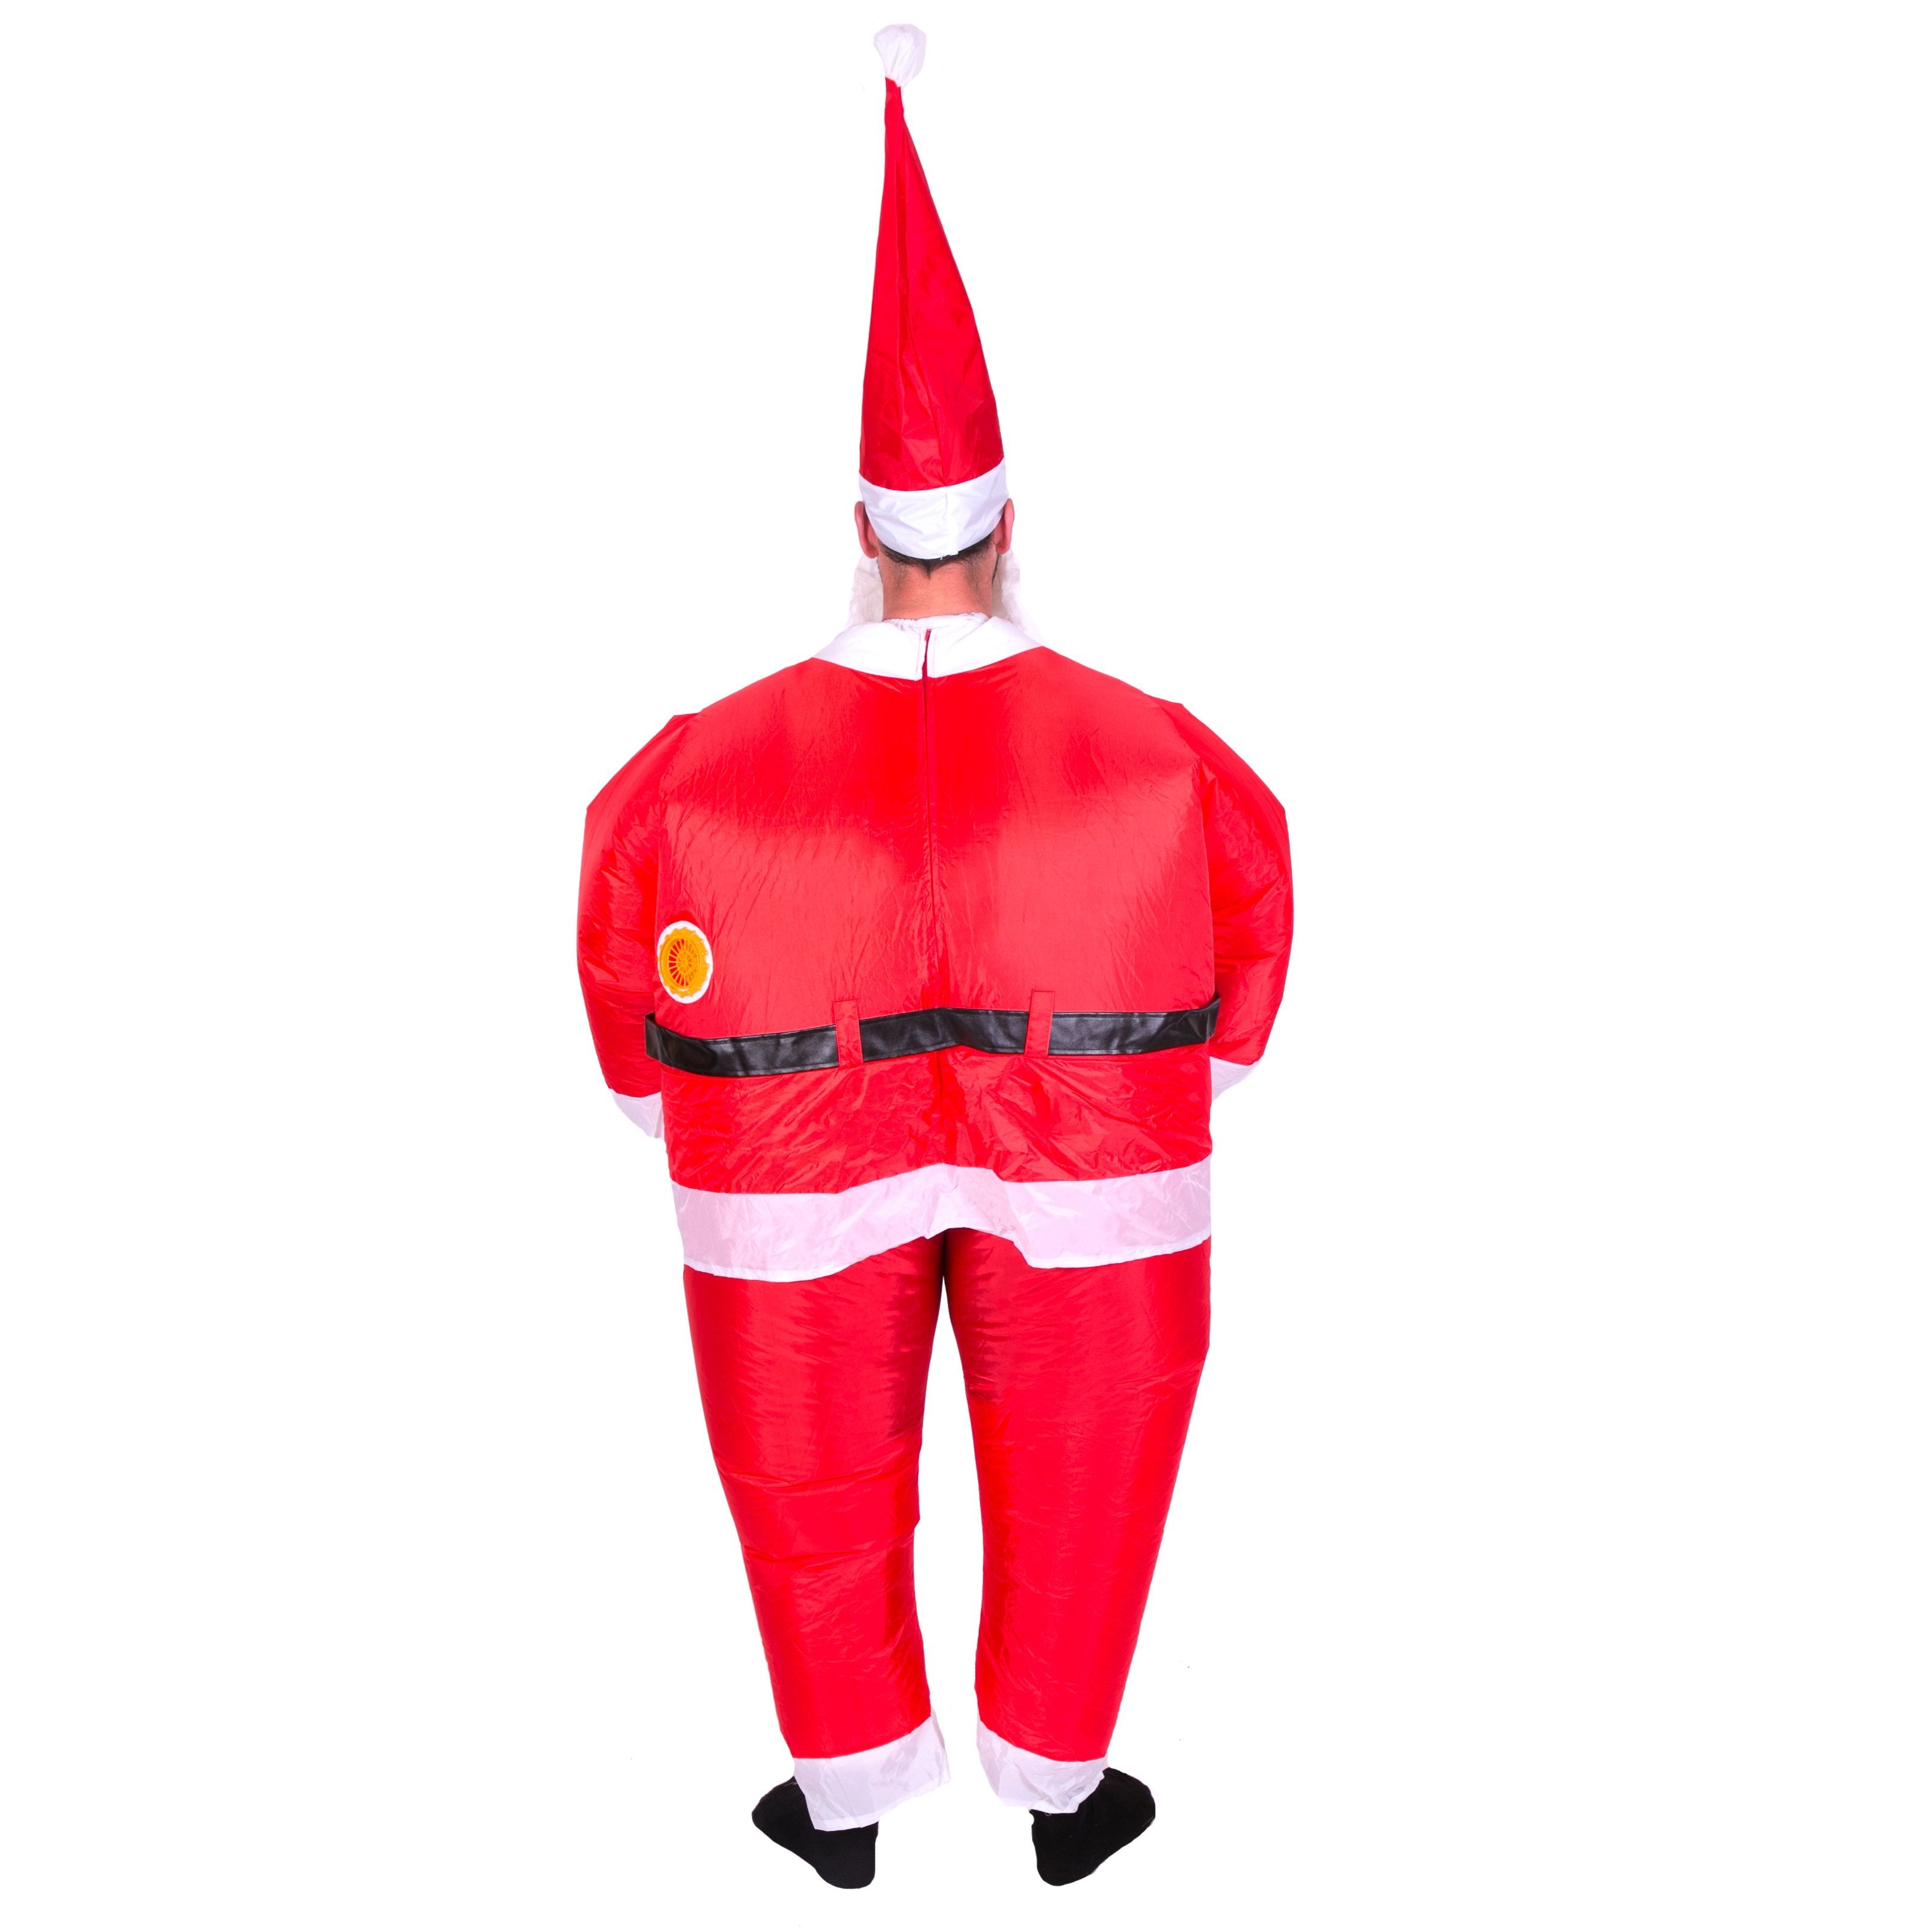 Bodysocks - Inflatable Santa Costume